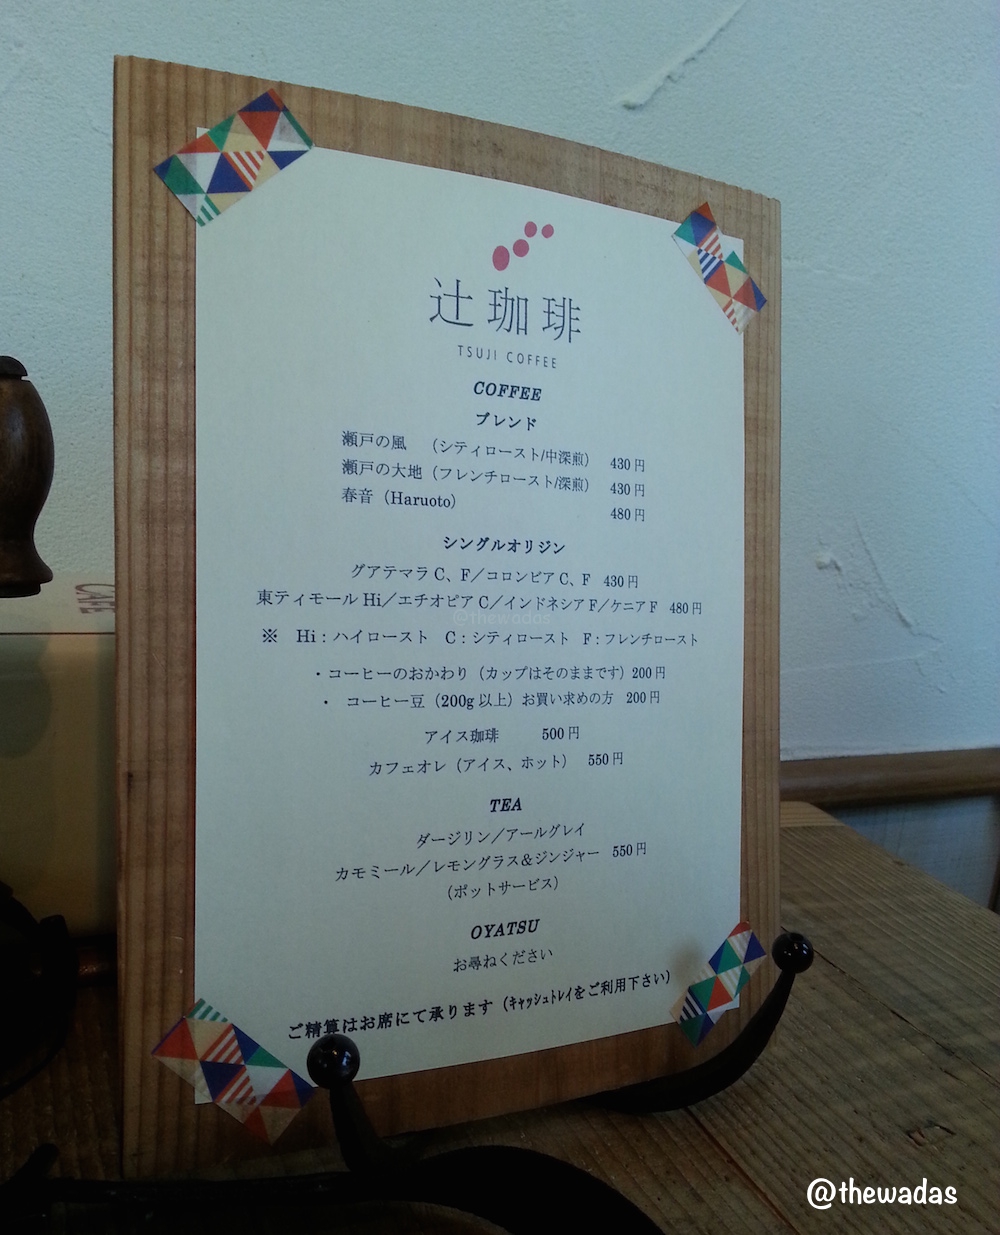 Tsuji Coffee: Cafe in Kasaoka City, coffee and sweets menu